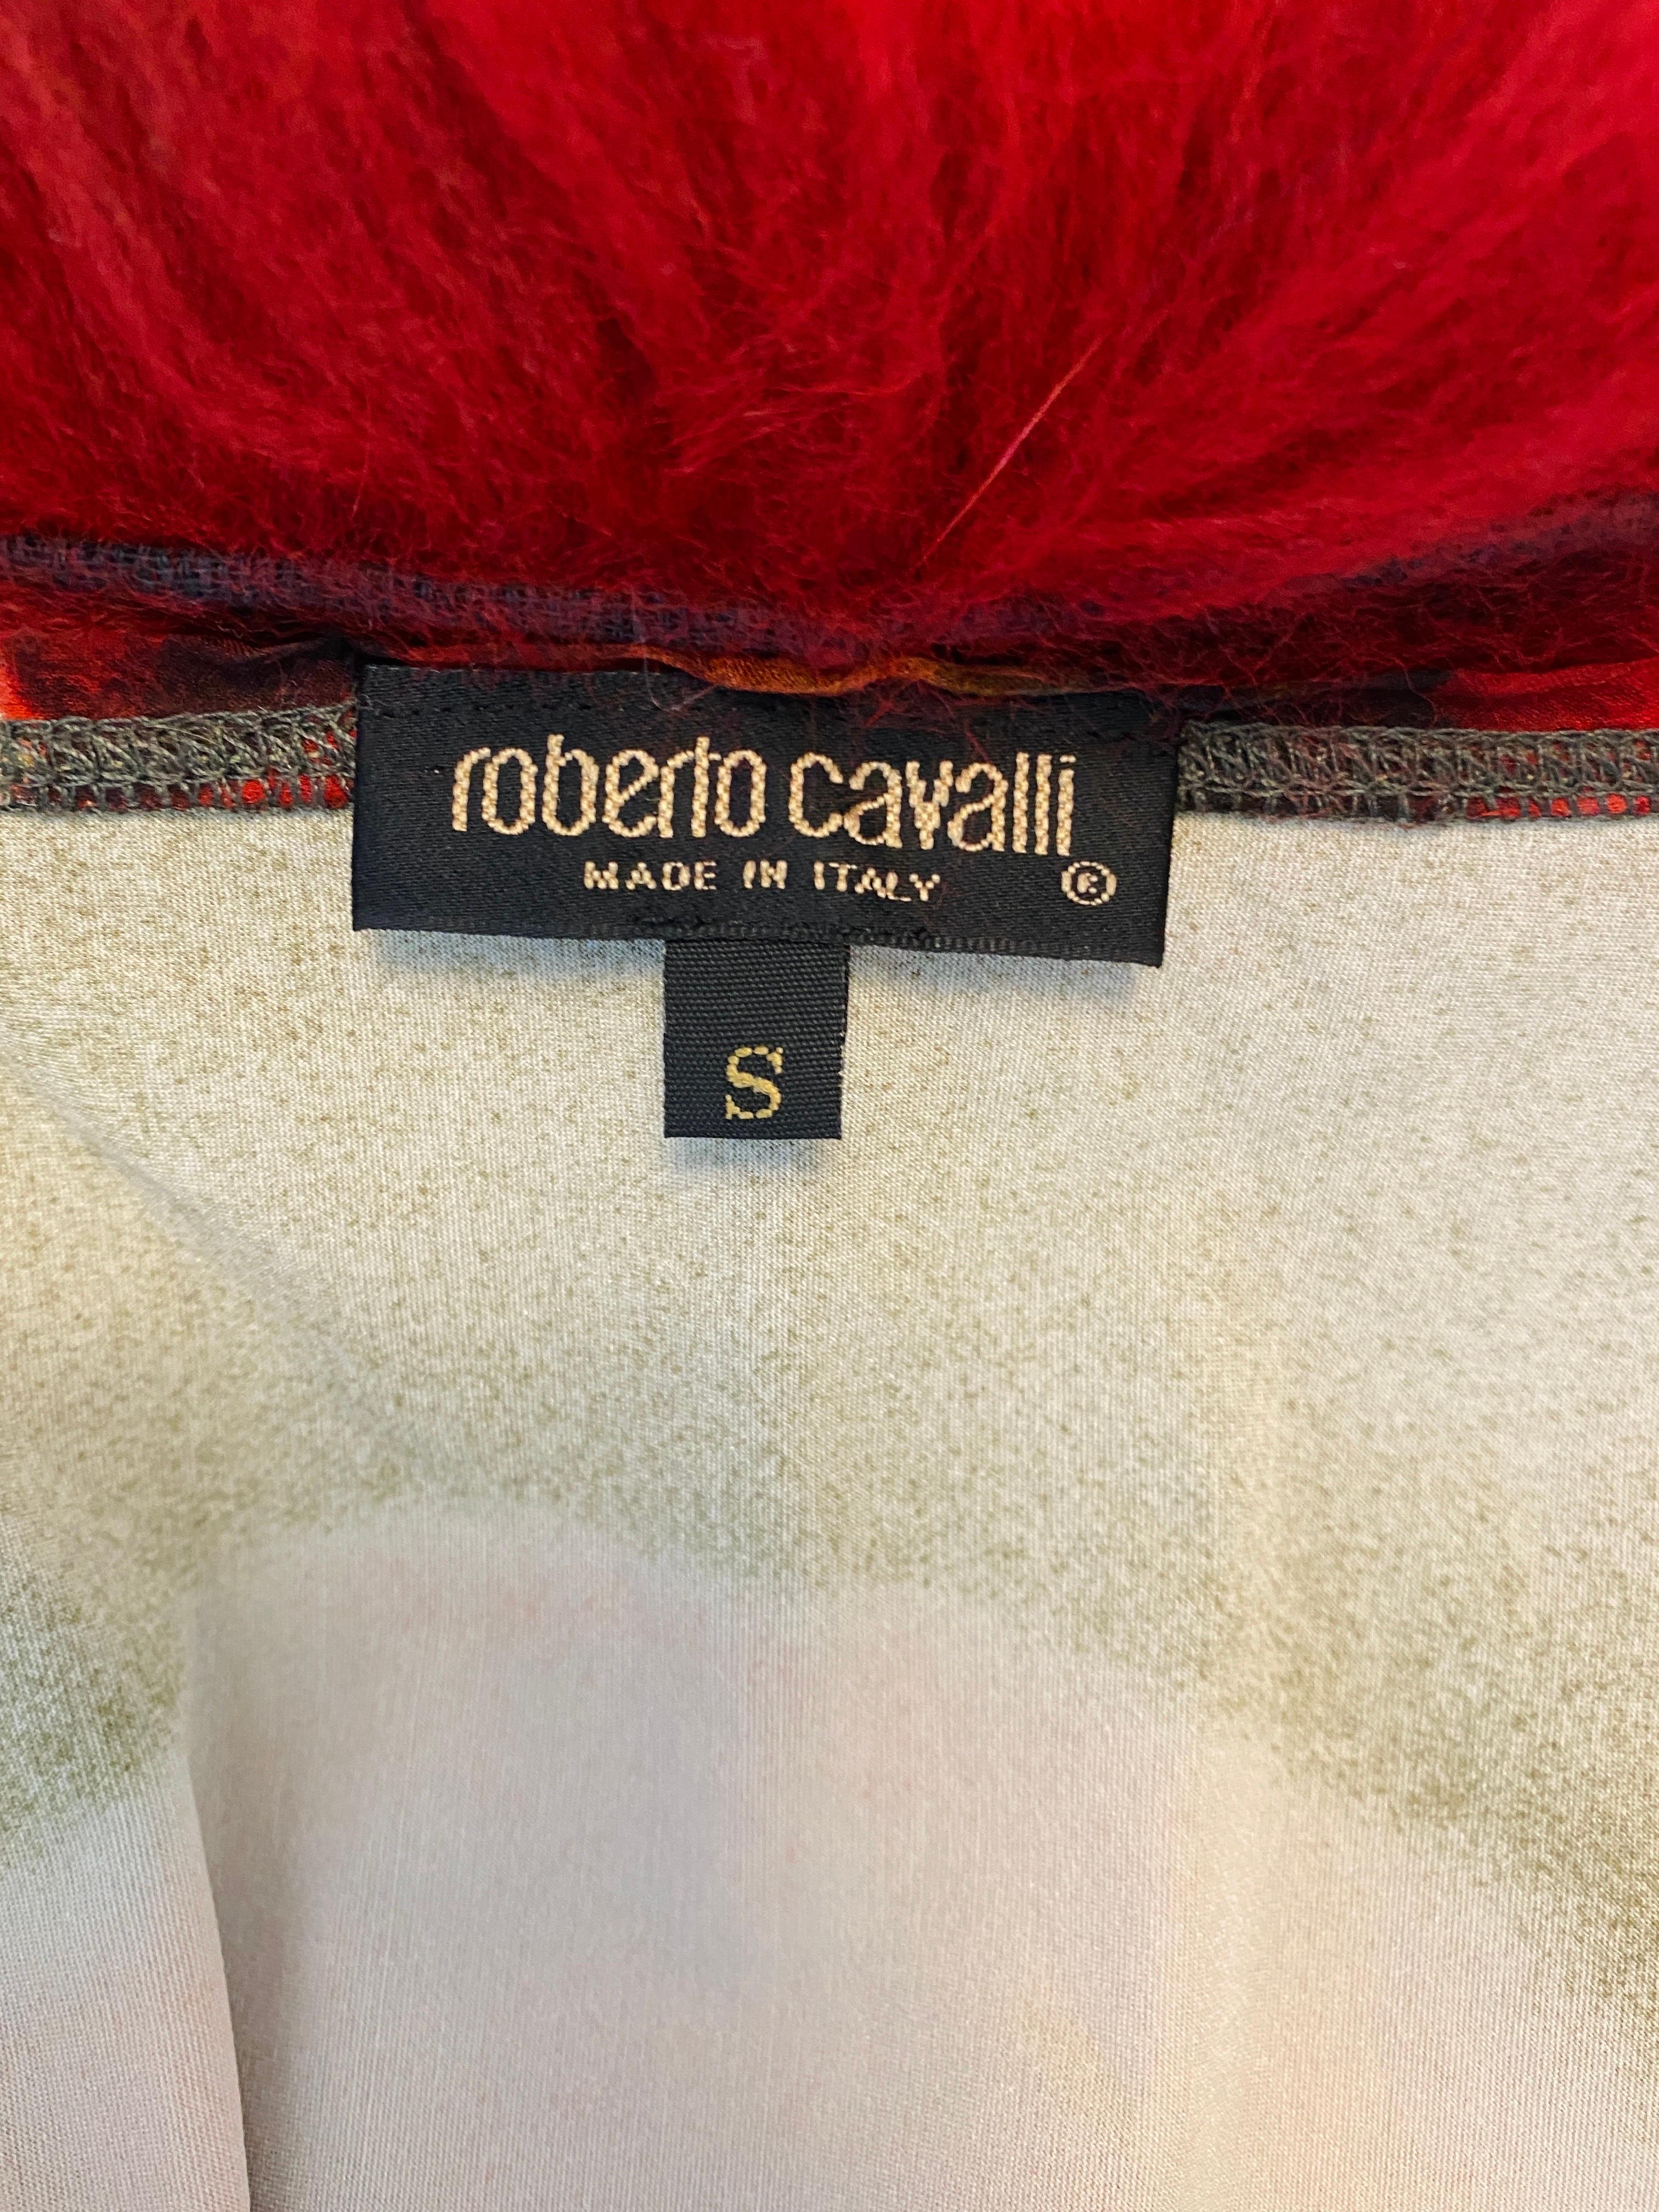 Vintage F/W 1999 Roberto Cavalli Velvet Red Floral Jacket Dress Fox Fur Collar For Sale 12